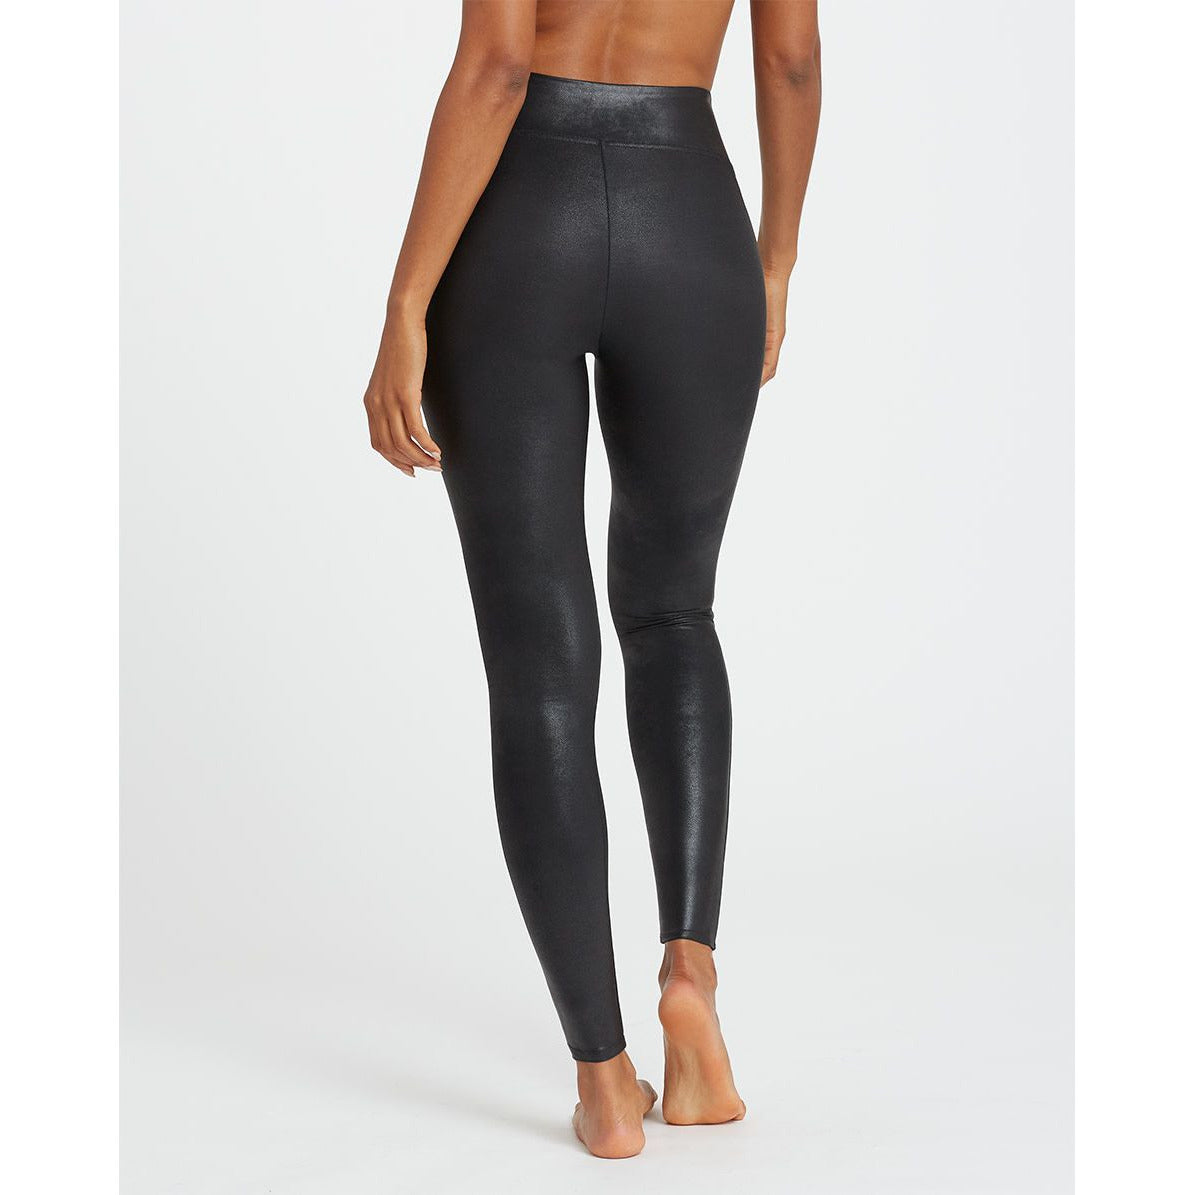 SPANX, Pants & Jumpsuits, Spanx Faux Leather Leggings Black Size Medium